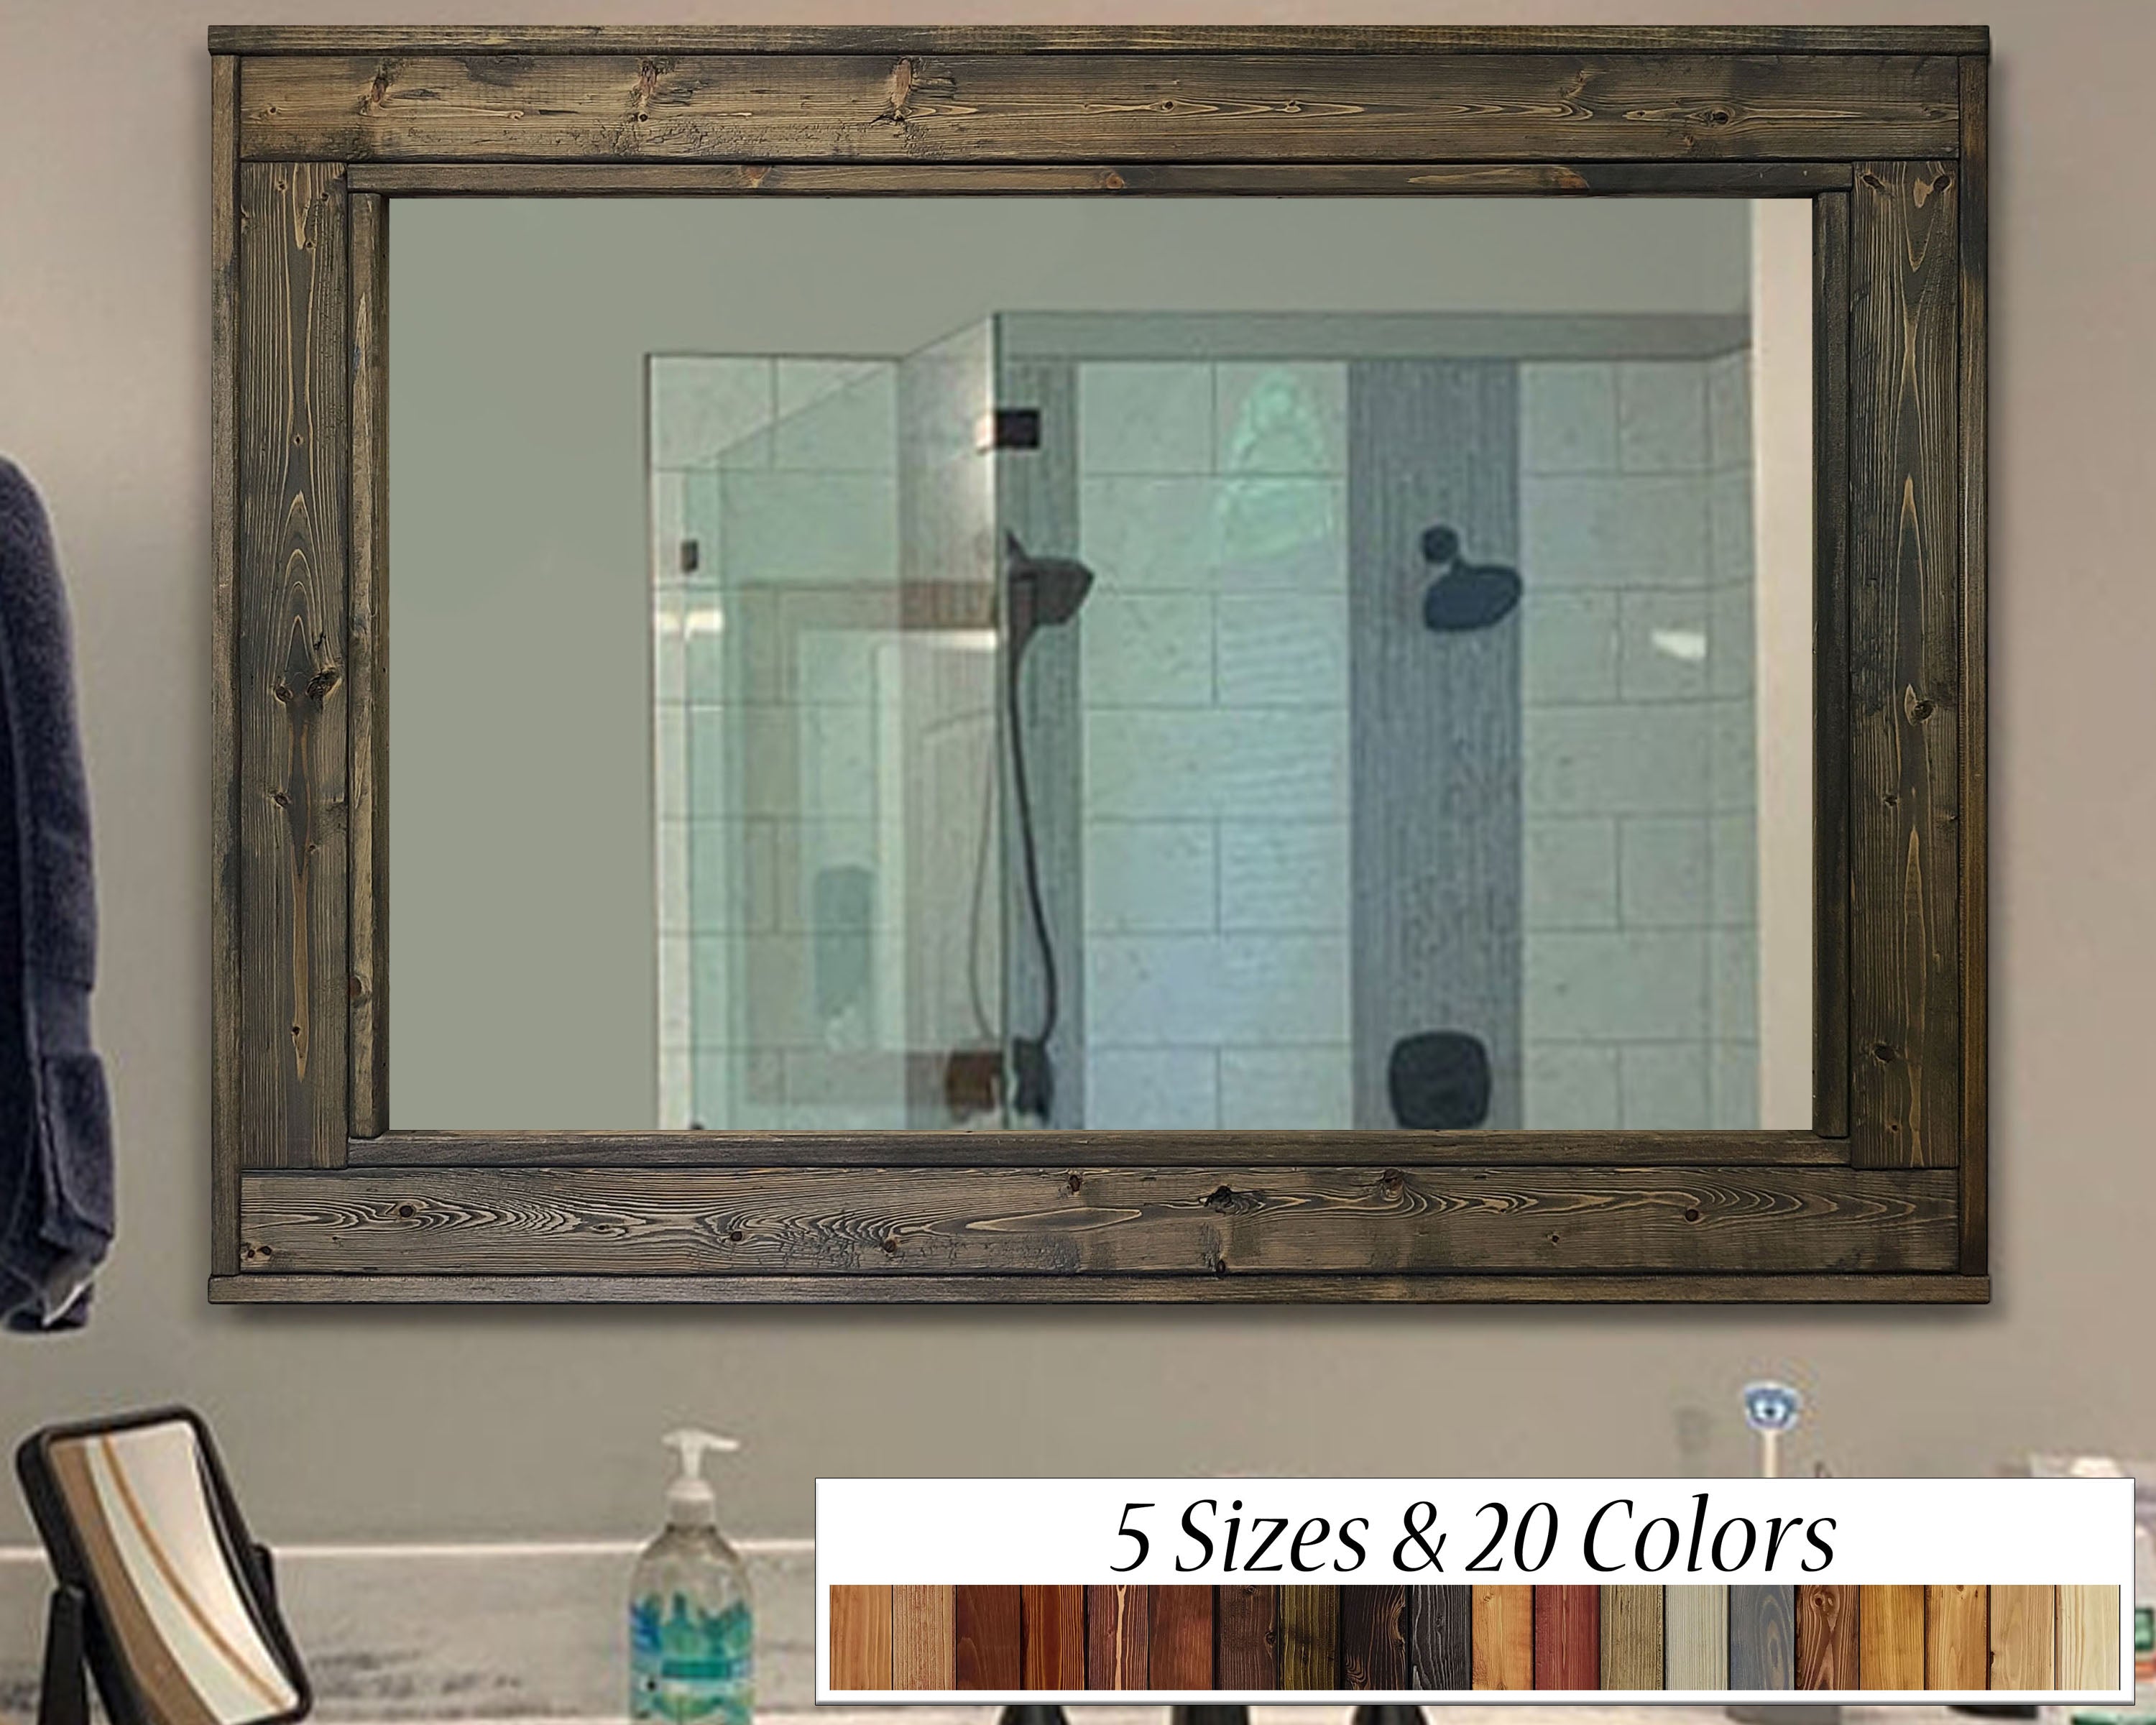 Herringbone Reclaimed Styled Wood Mirror, 20 Stain Colors & Custom Sizes by Lane of Lenore